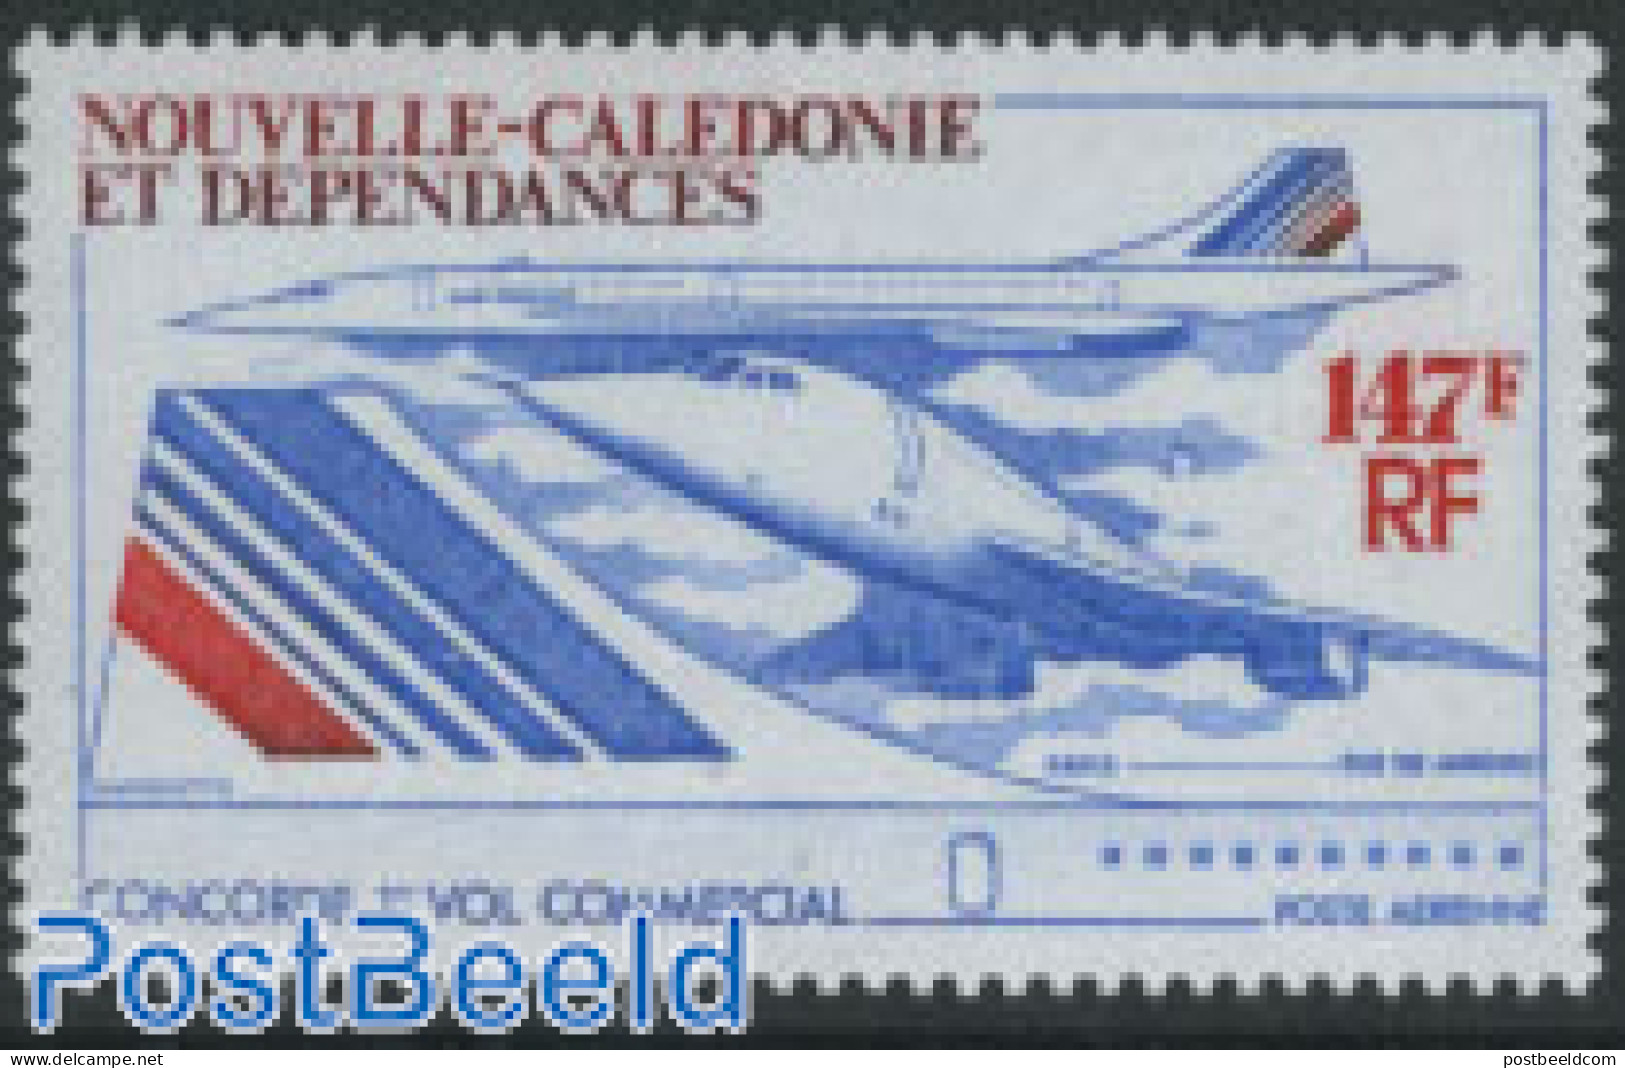 New Caledonia 1976 Concorde Flight 1v, Mint NH, Transport - Concorde - Aircraft & Aviation - Ongebruikt